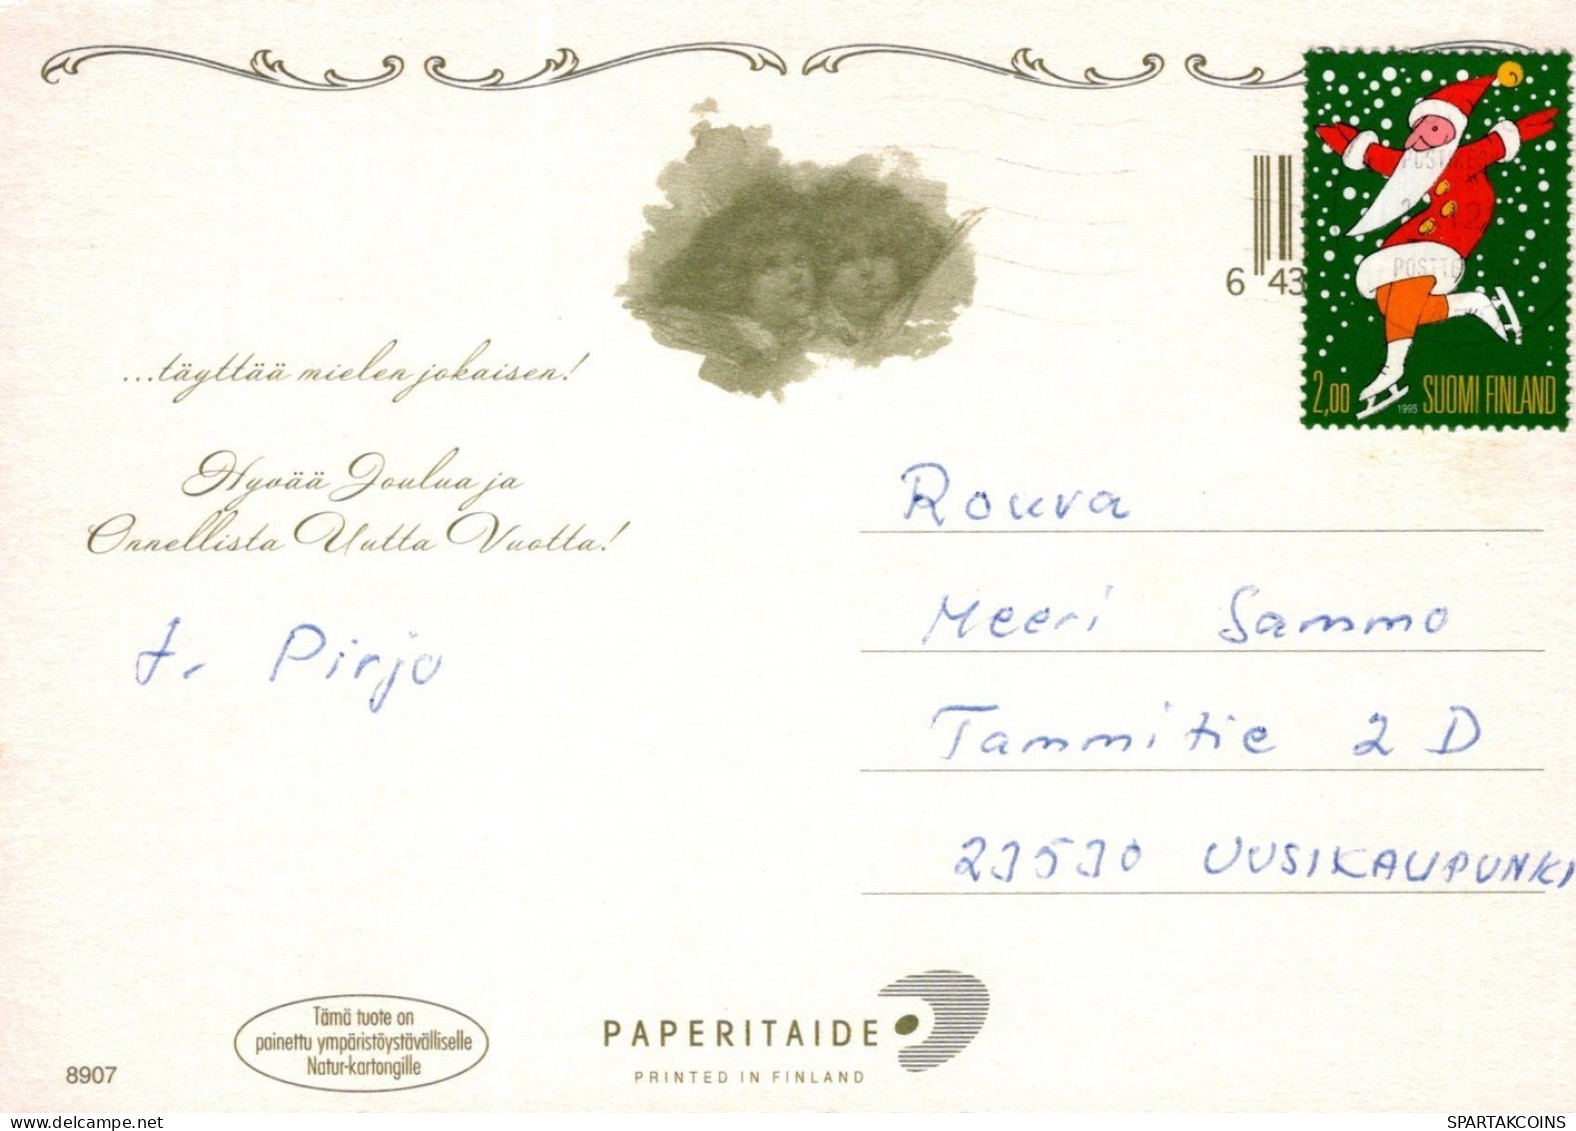 ANGEL CHRISTMAS Holidays Vintage Postcard CPSM #PAH213.GB - Anges